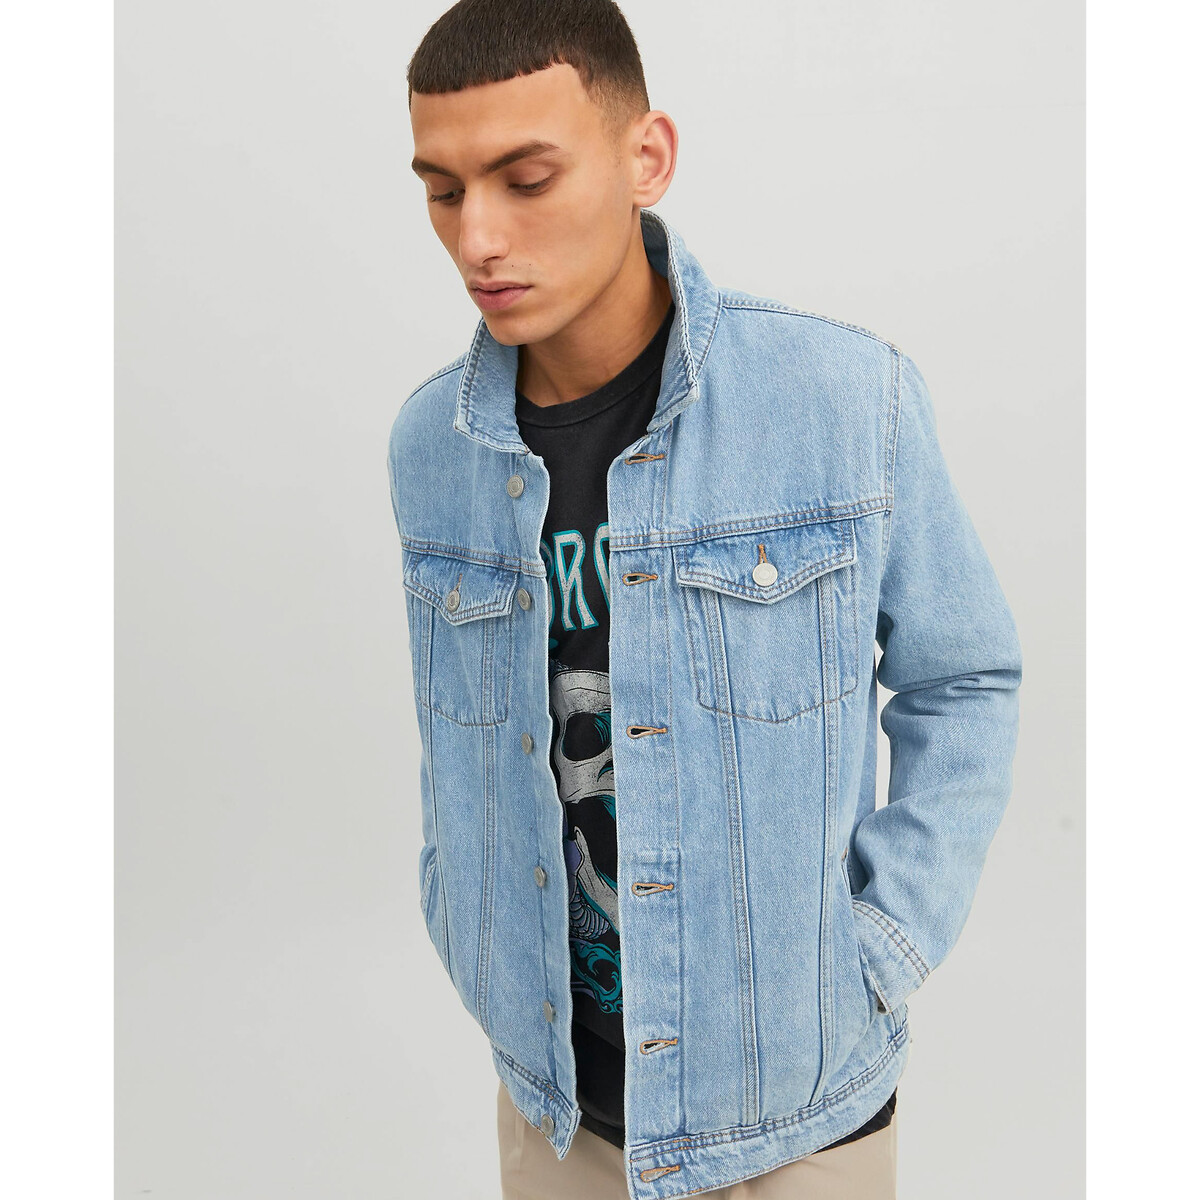 Куртка Из джинсовой ткани XXL синий LaRedoute, размер XXL - фото 2